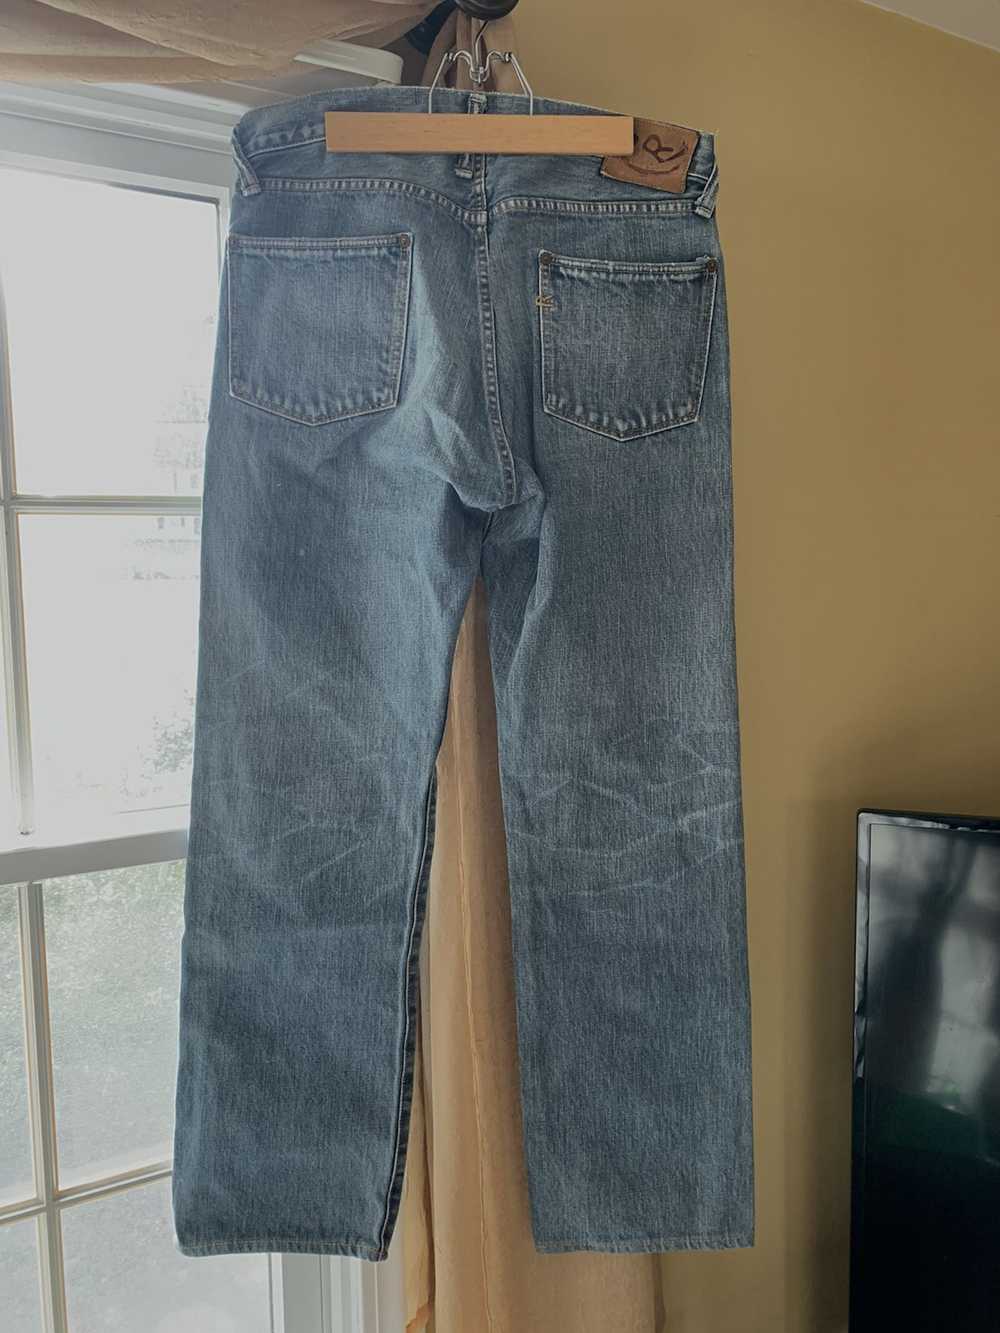 45rpm 45rpm Indigo Jeans - image 2